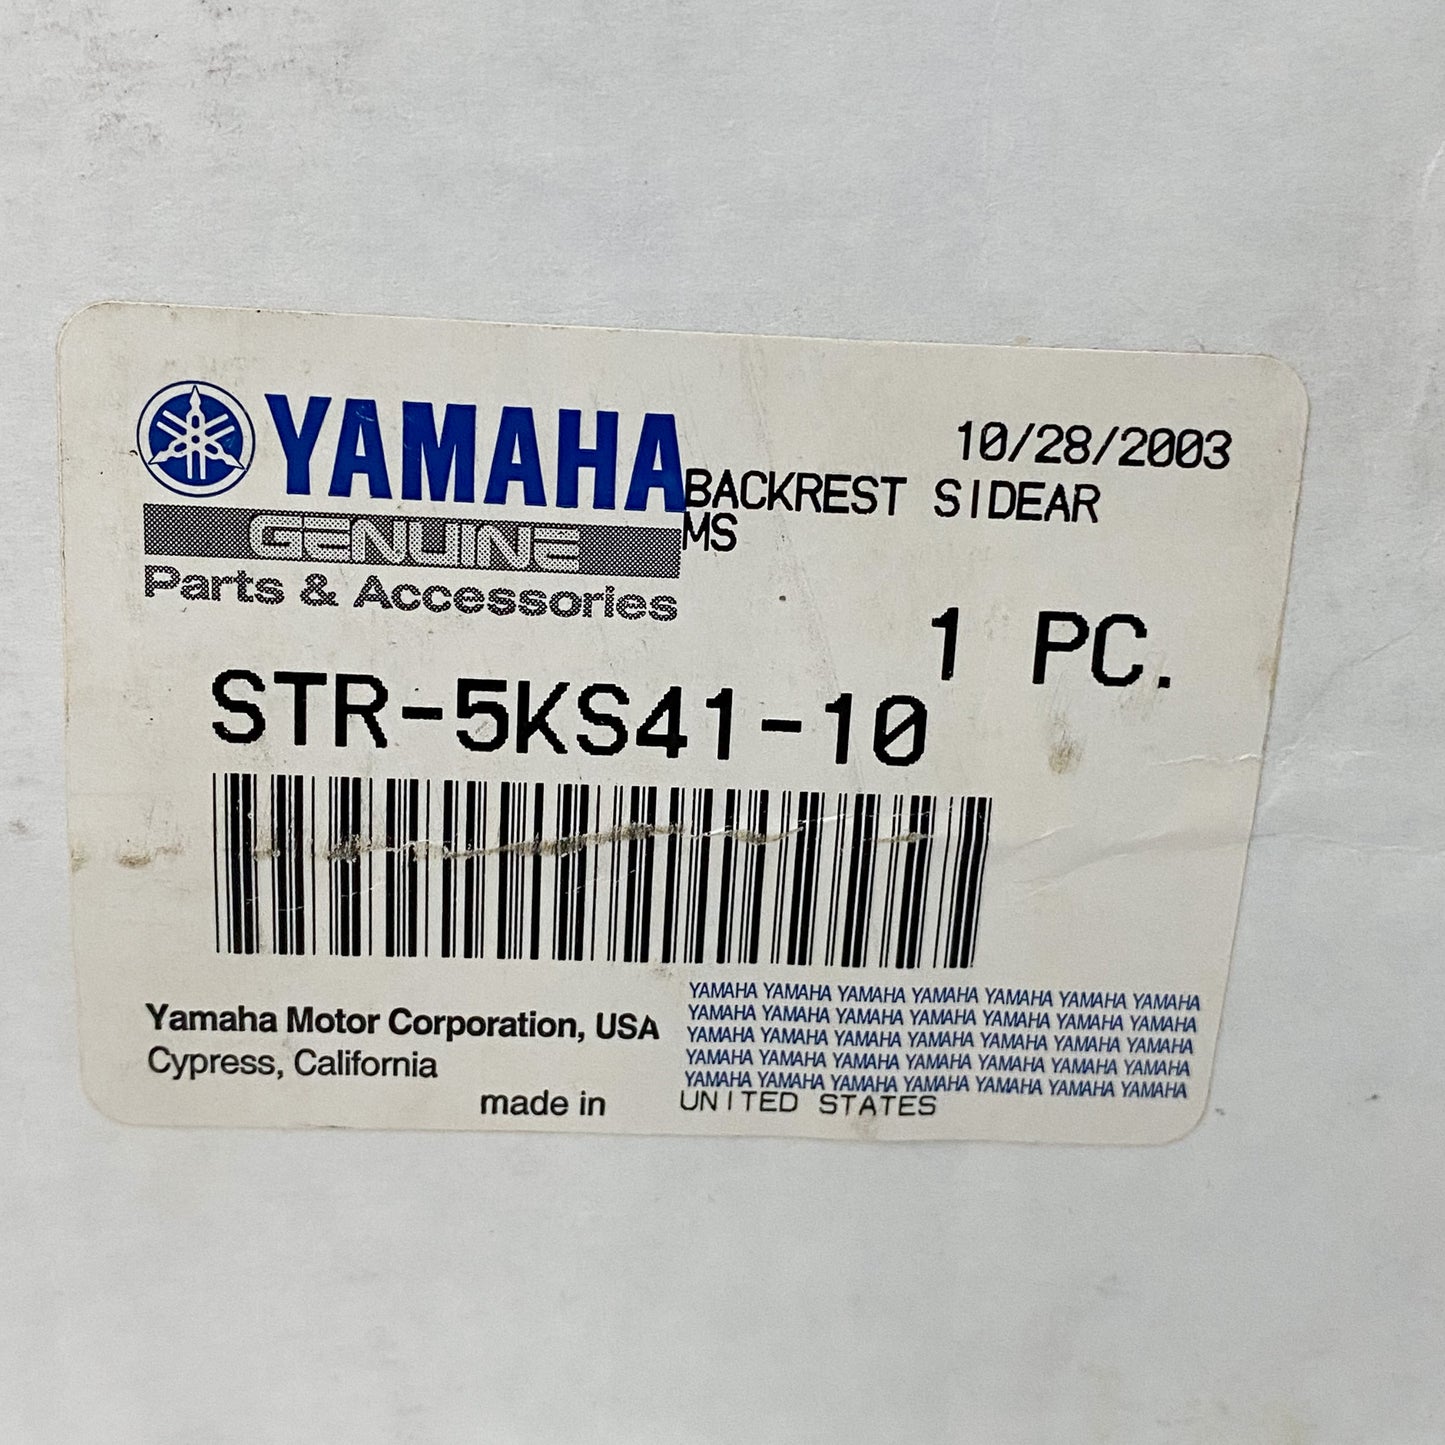 Yamaha Chrome Backrest Side Arms STR-5KS41-10-00